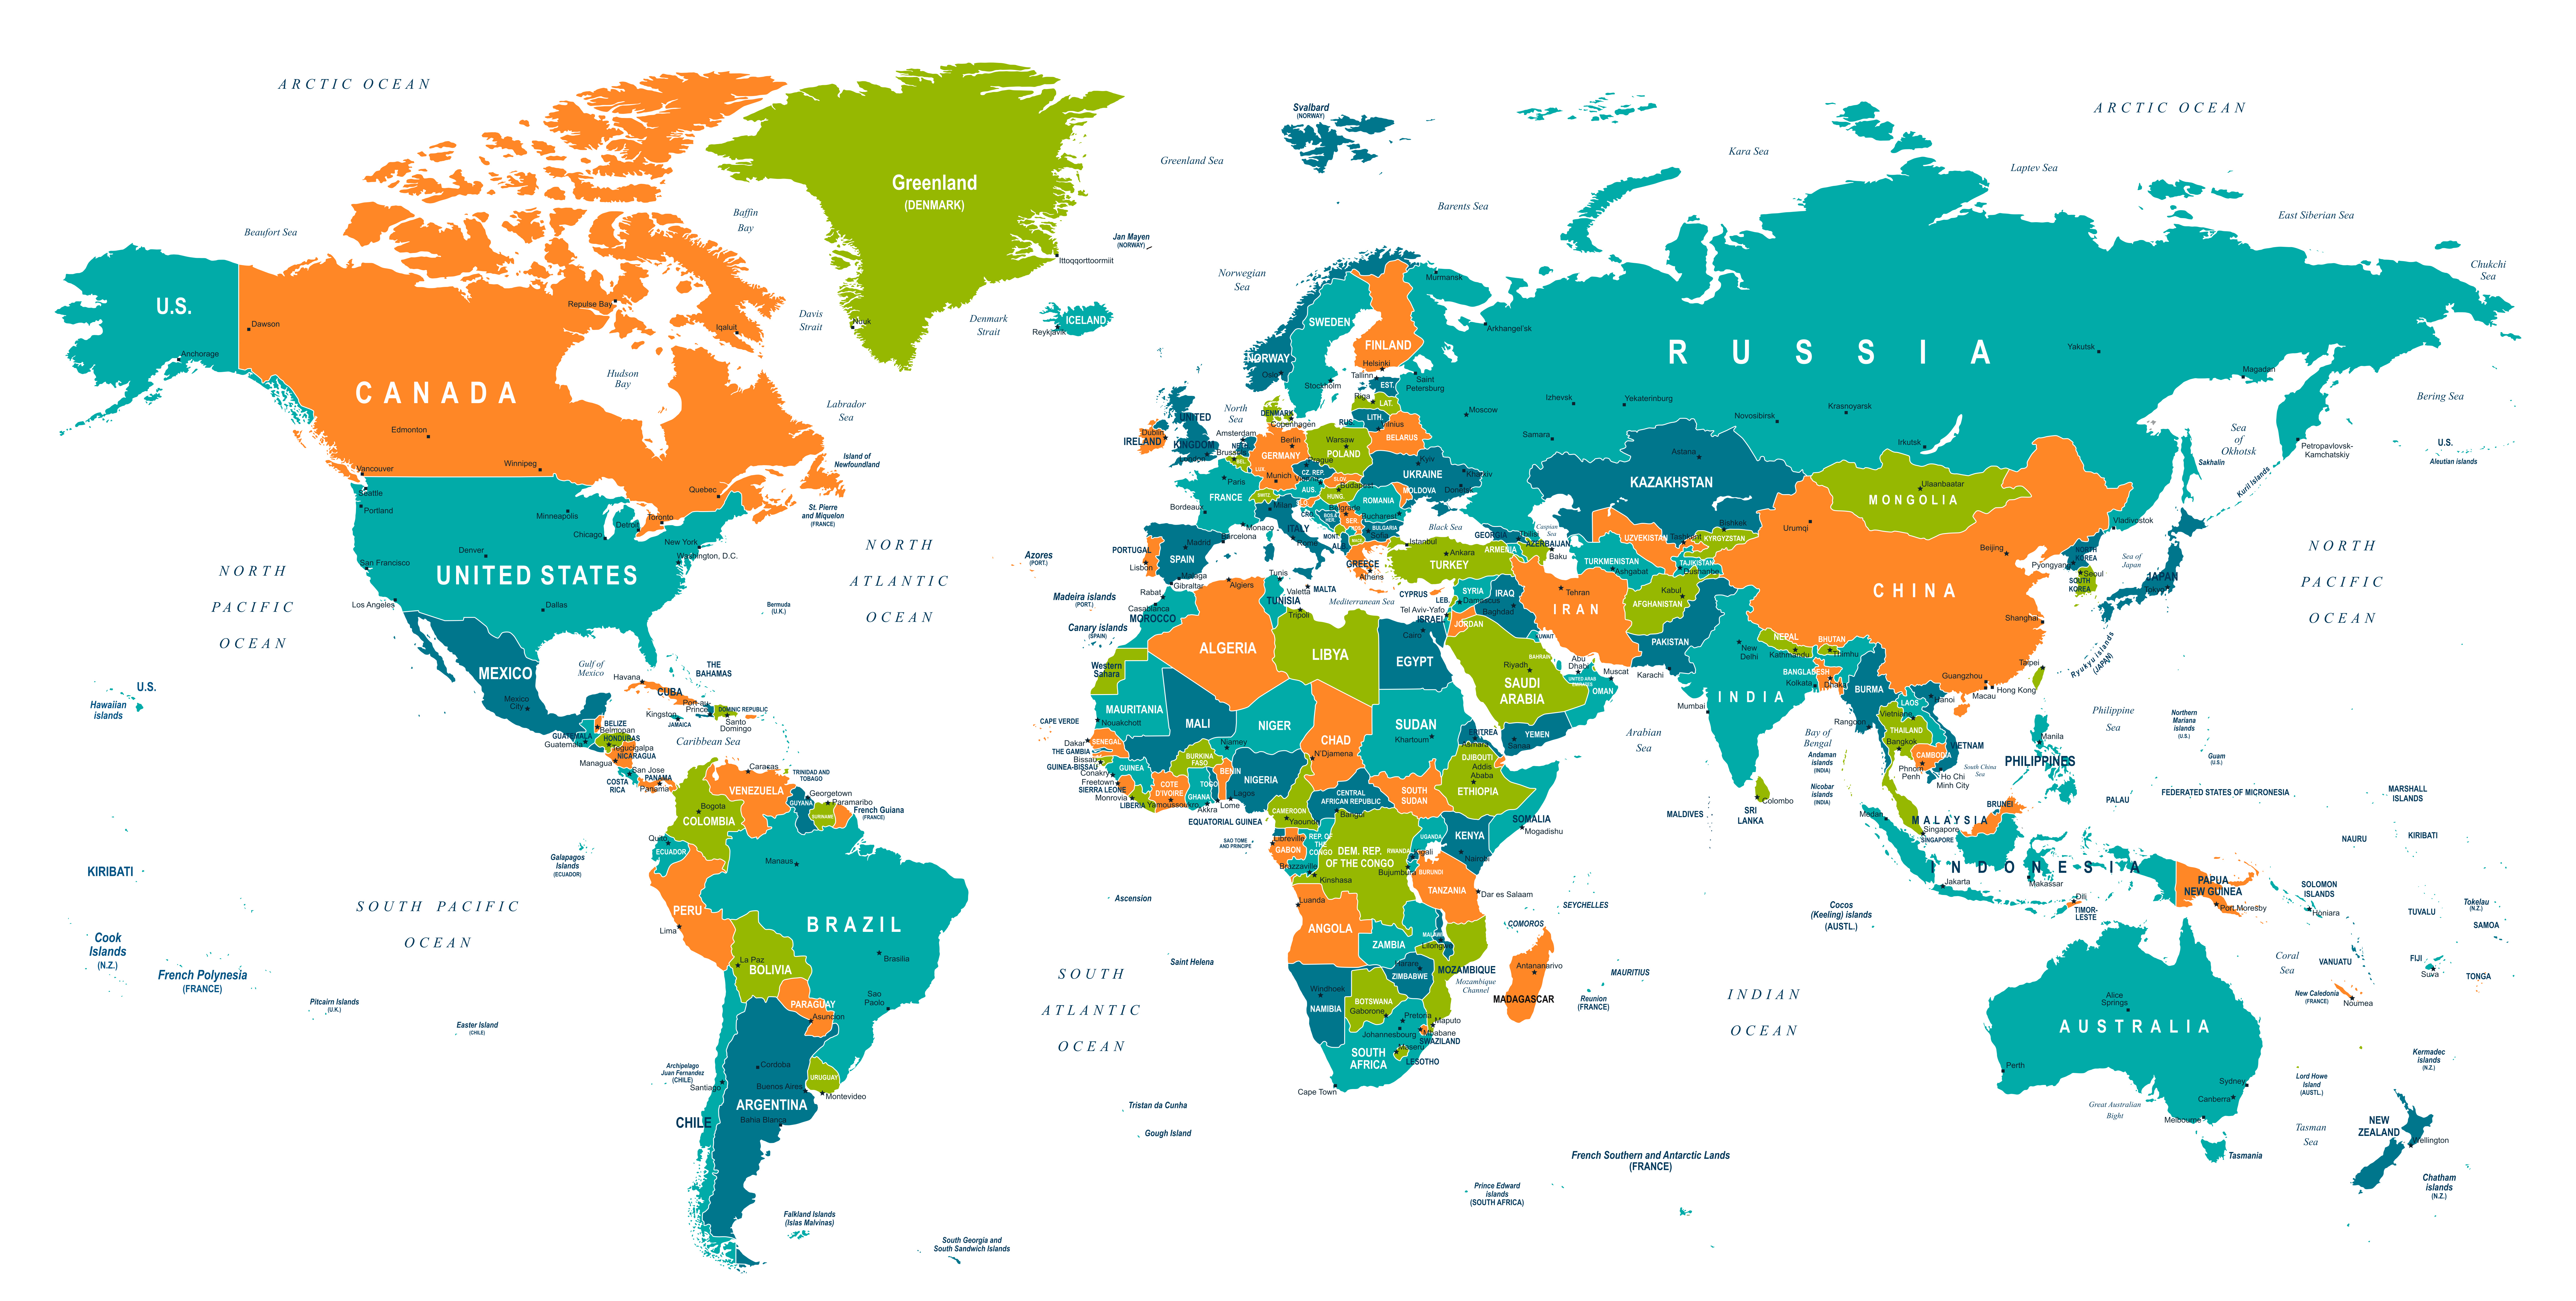 Colorful World Map Download Free Vectors, Clipart Graphics & Vector Art